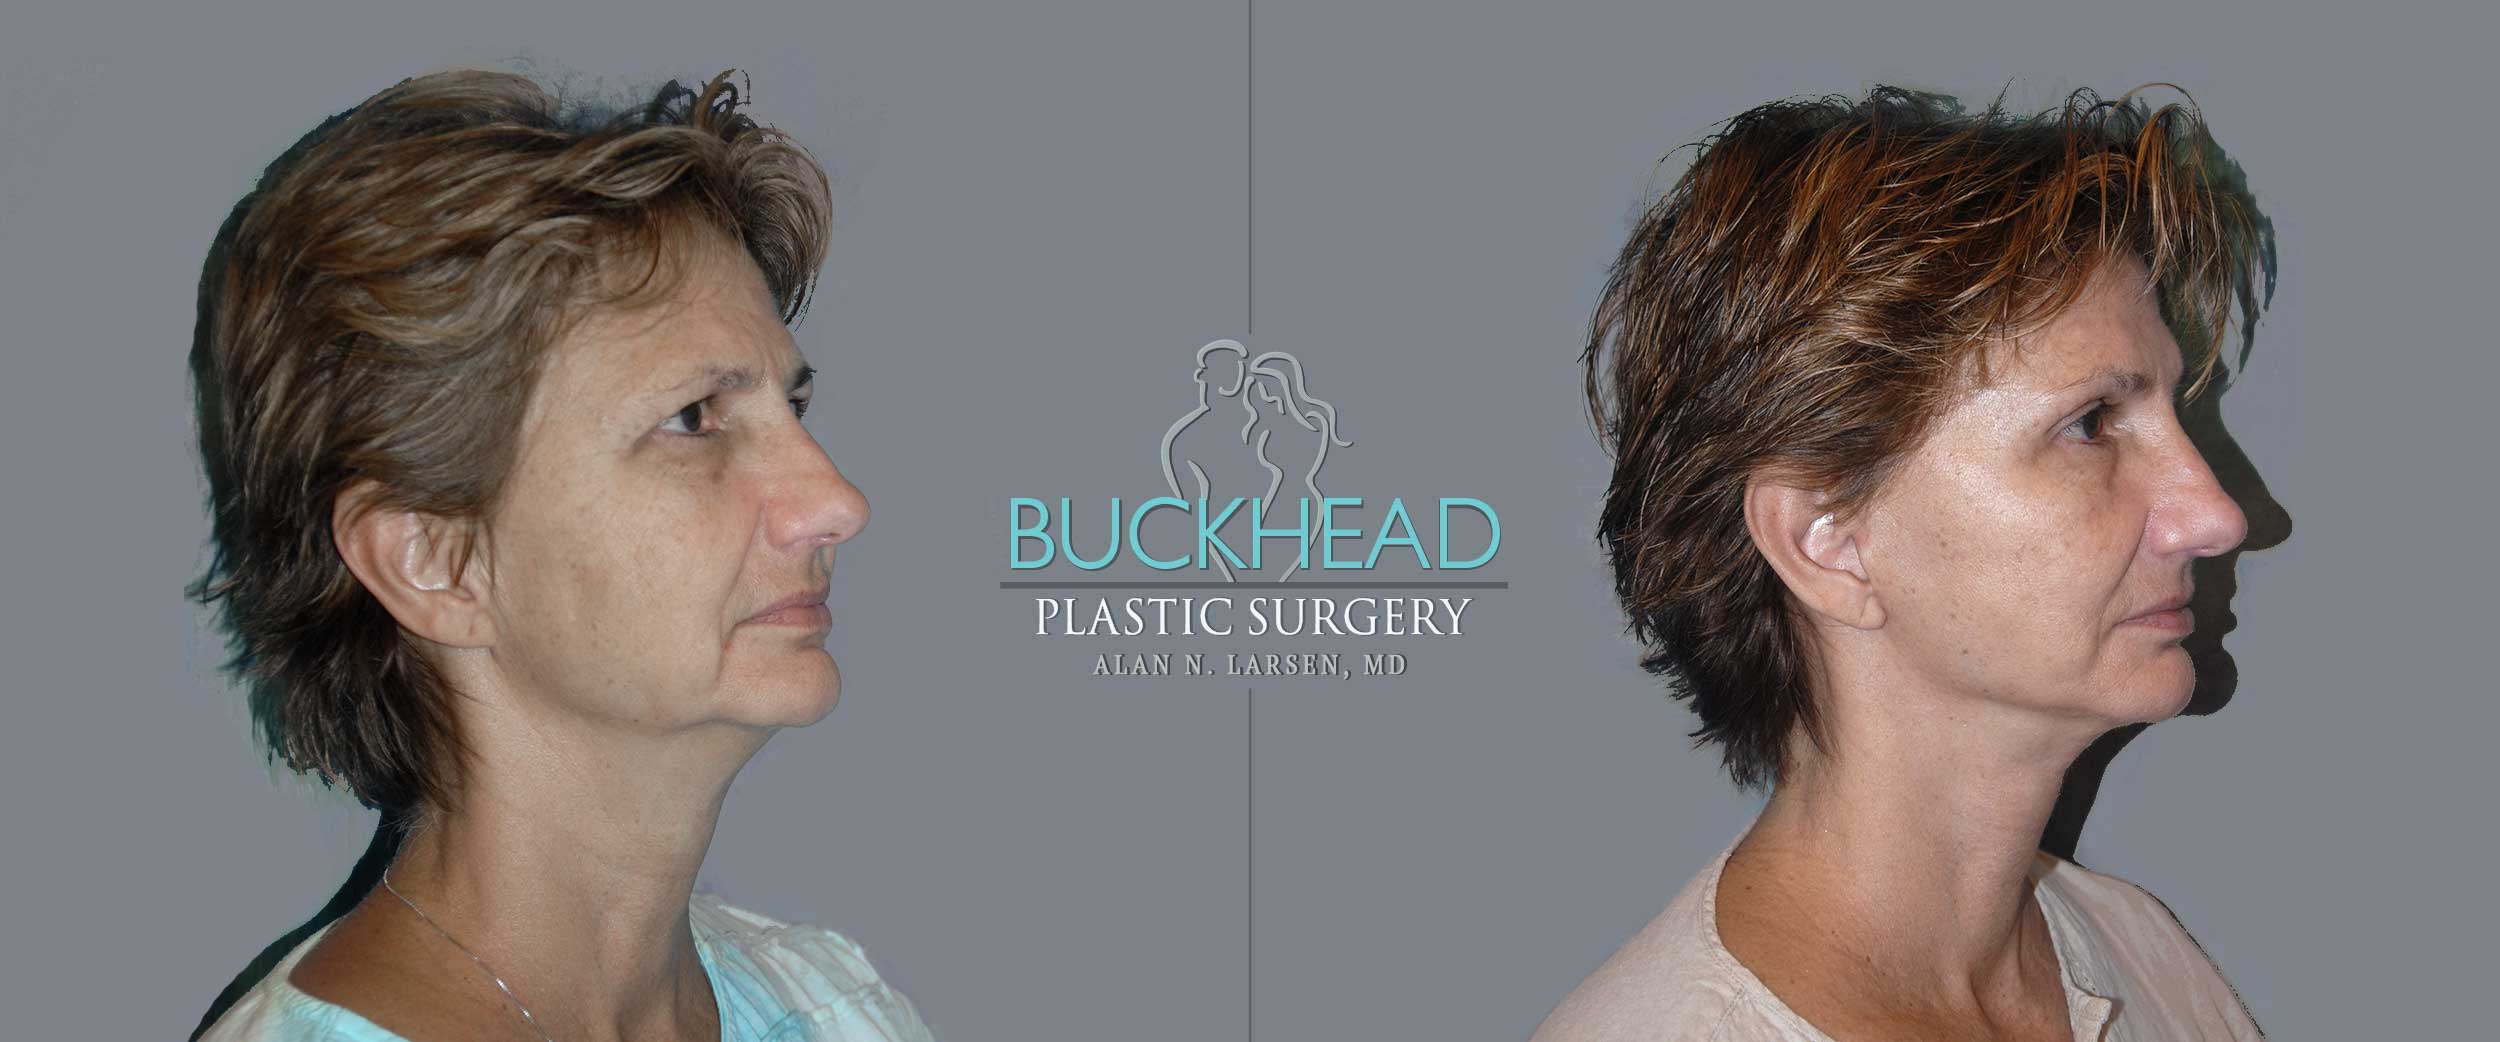 Before and After Photo Gallery | Mini Facelift | Buckhead Plastic Surgery | Alan N. Larsen, MD | Double Board-Certified Plastic Surgeon | Atlanta GA